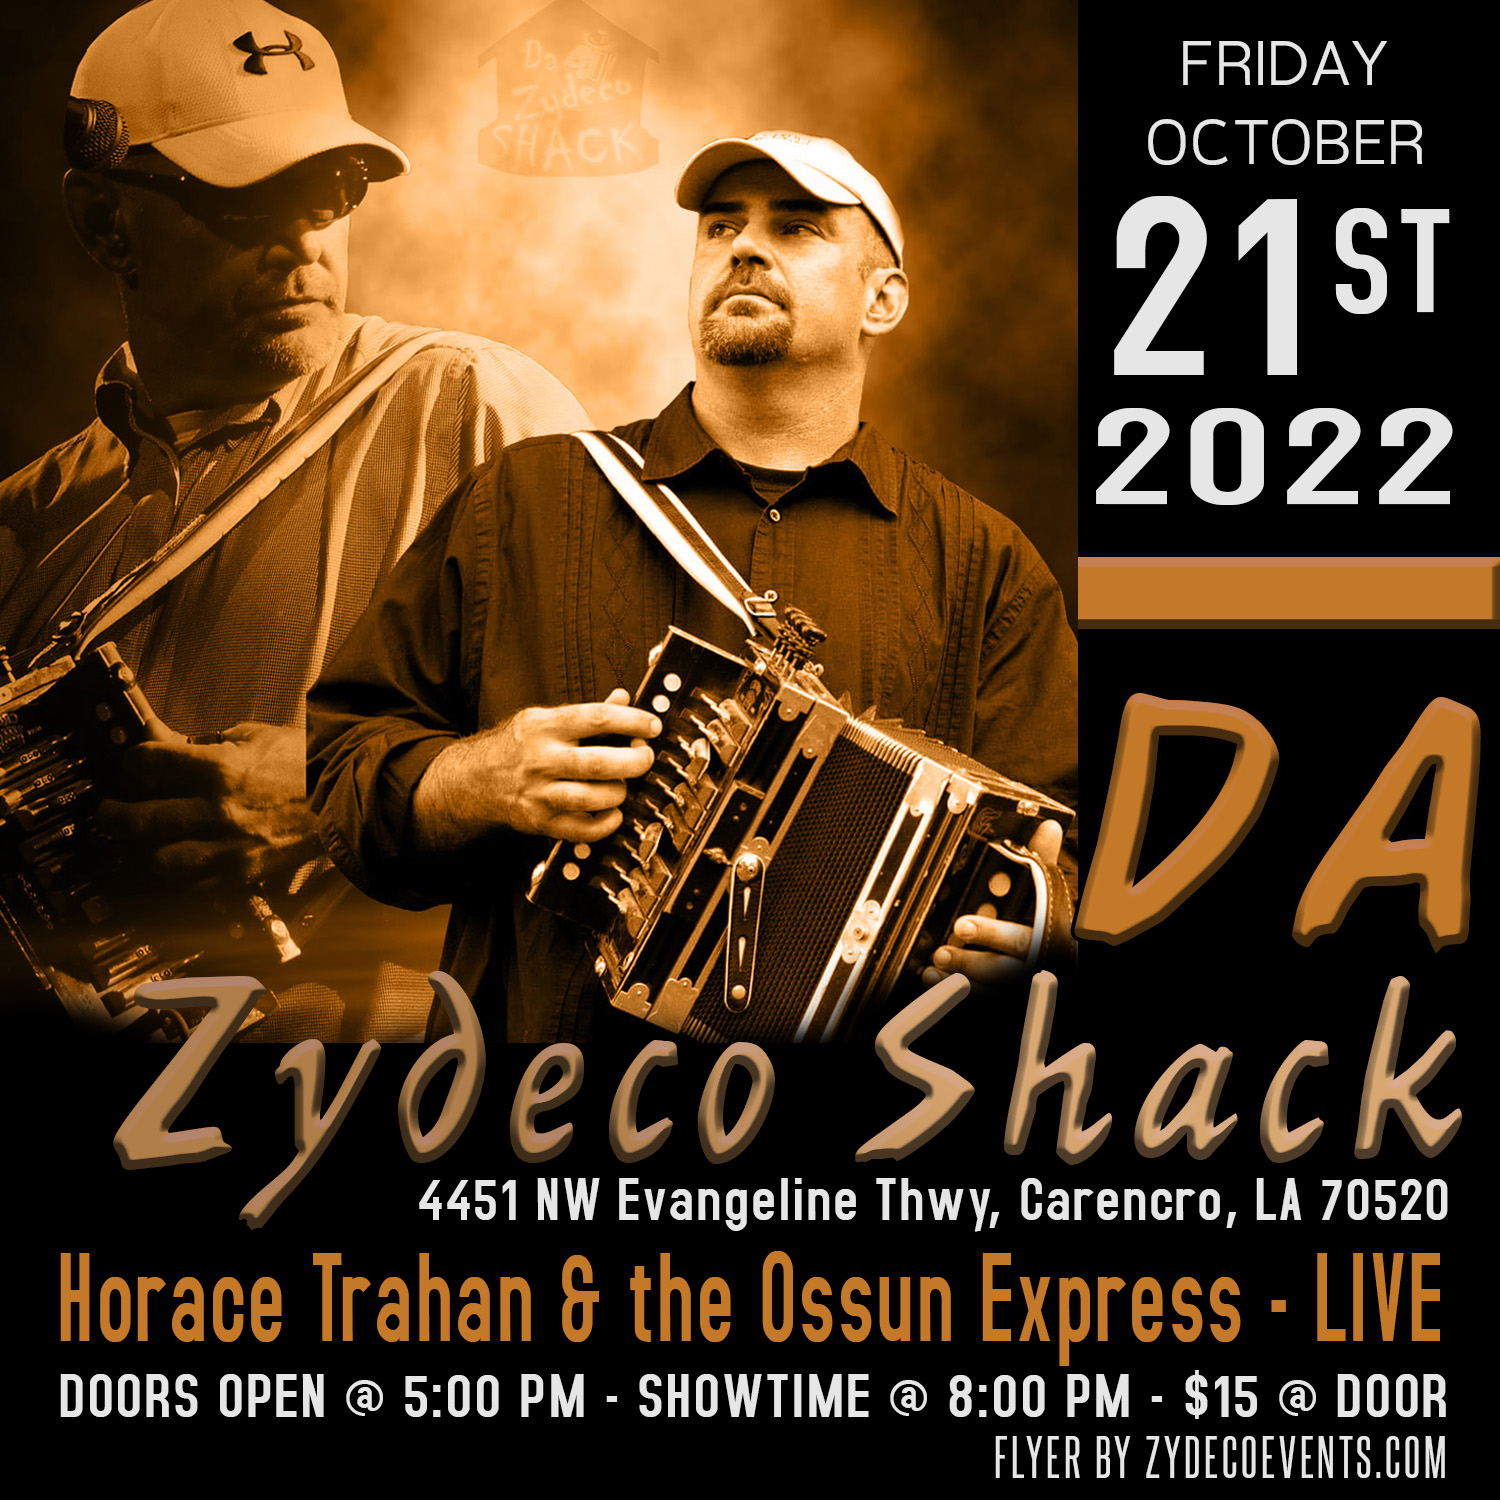 Horace Trahan & the Ossun Express - LIVE @ Da Zydeco Shack